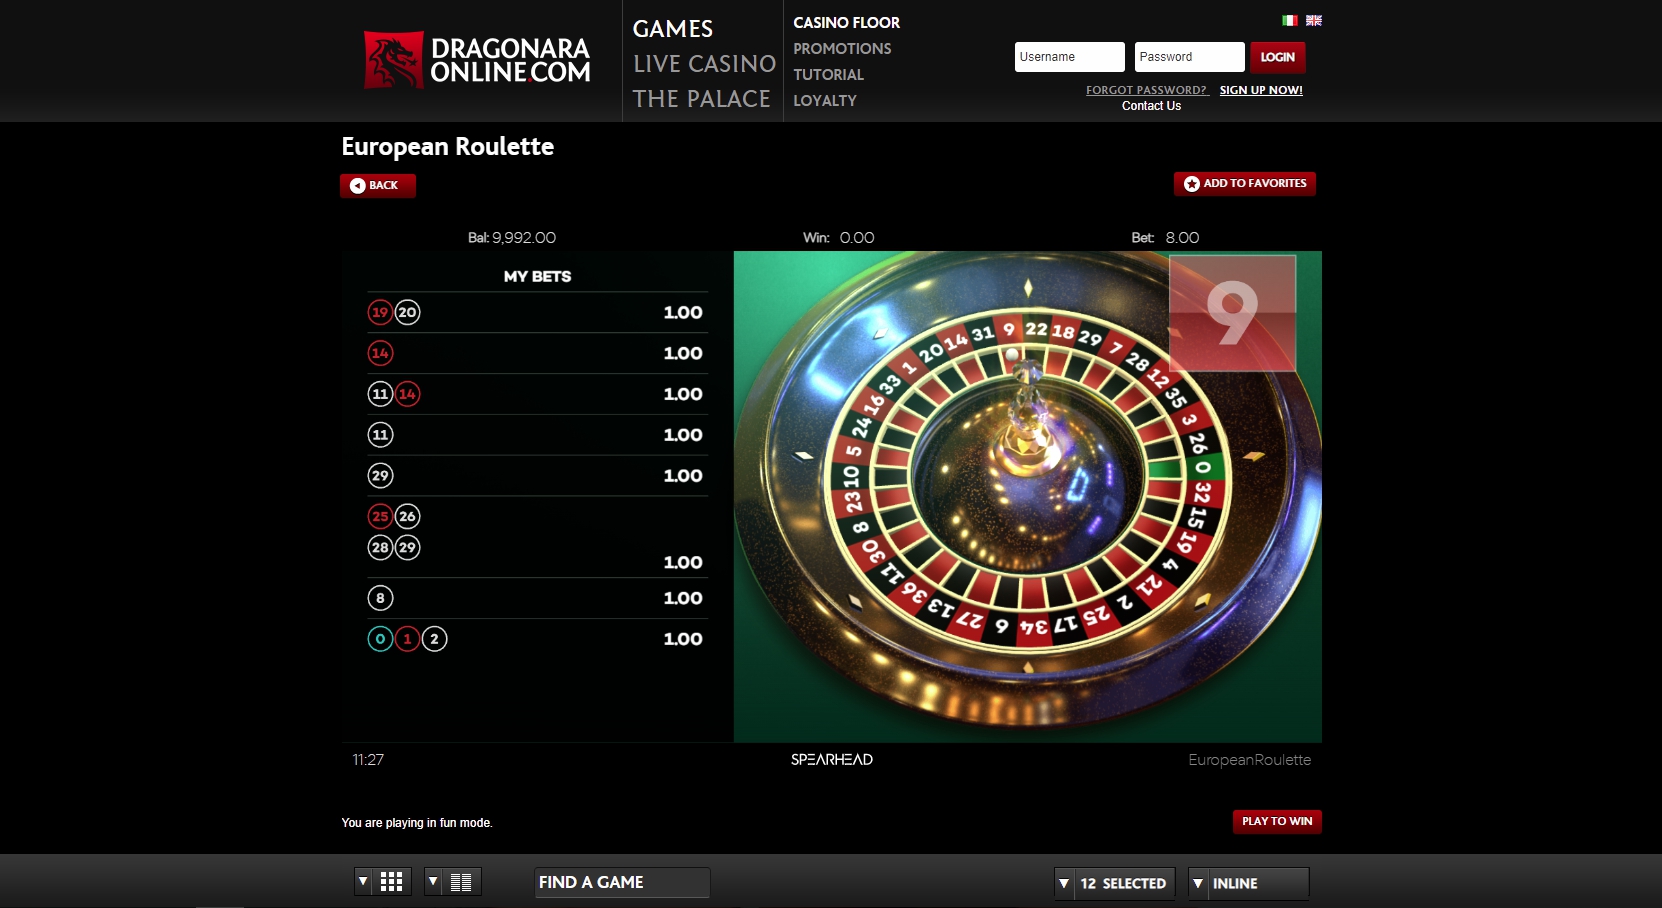 Dragonara Casino Casino Games